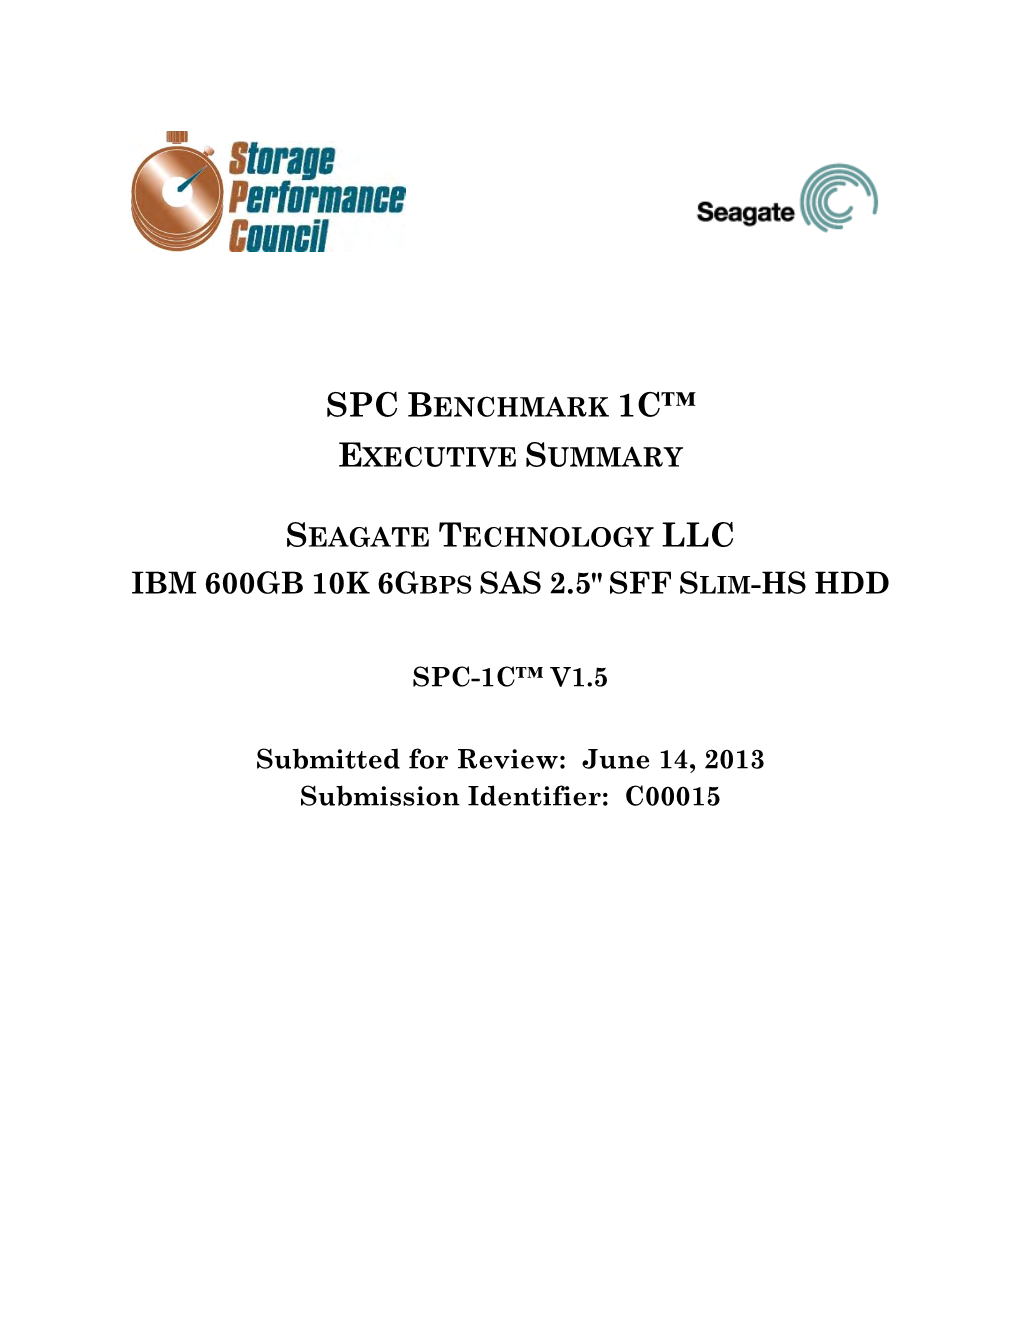 SPC Benchmark(Tm) 1 Executive Summary